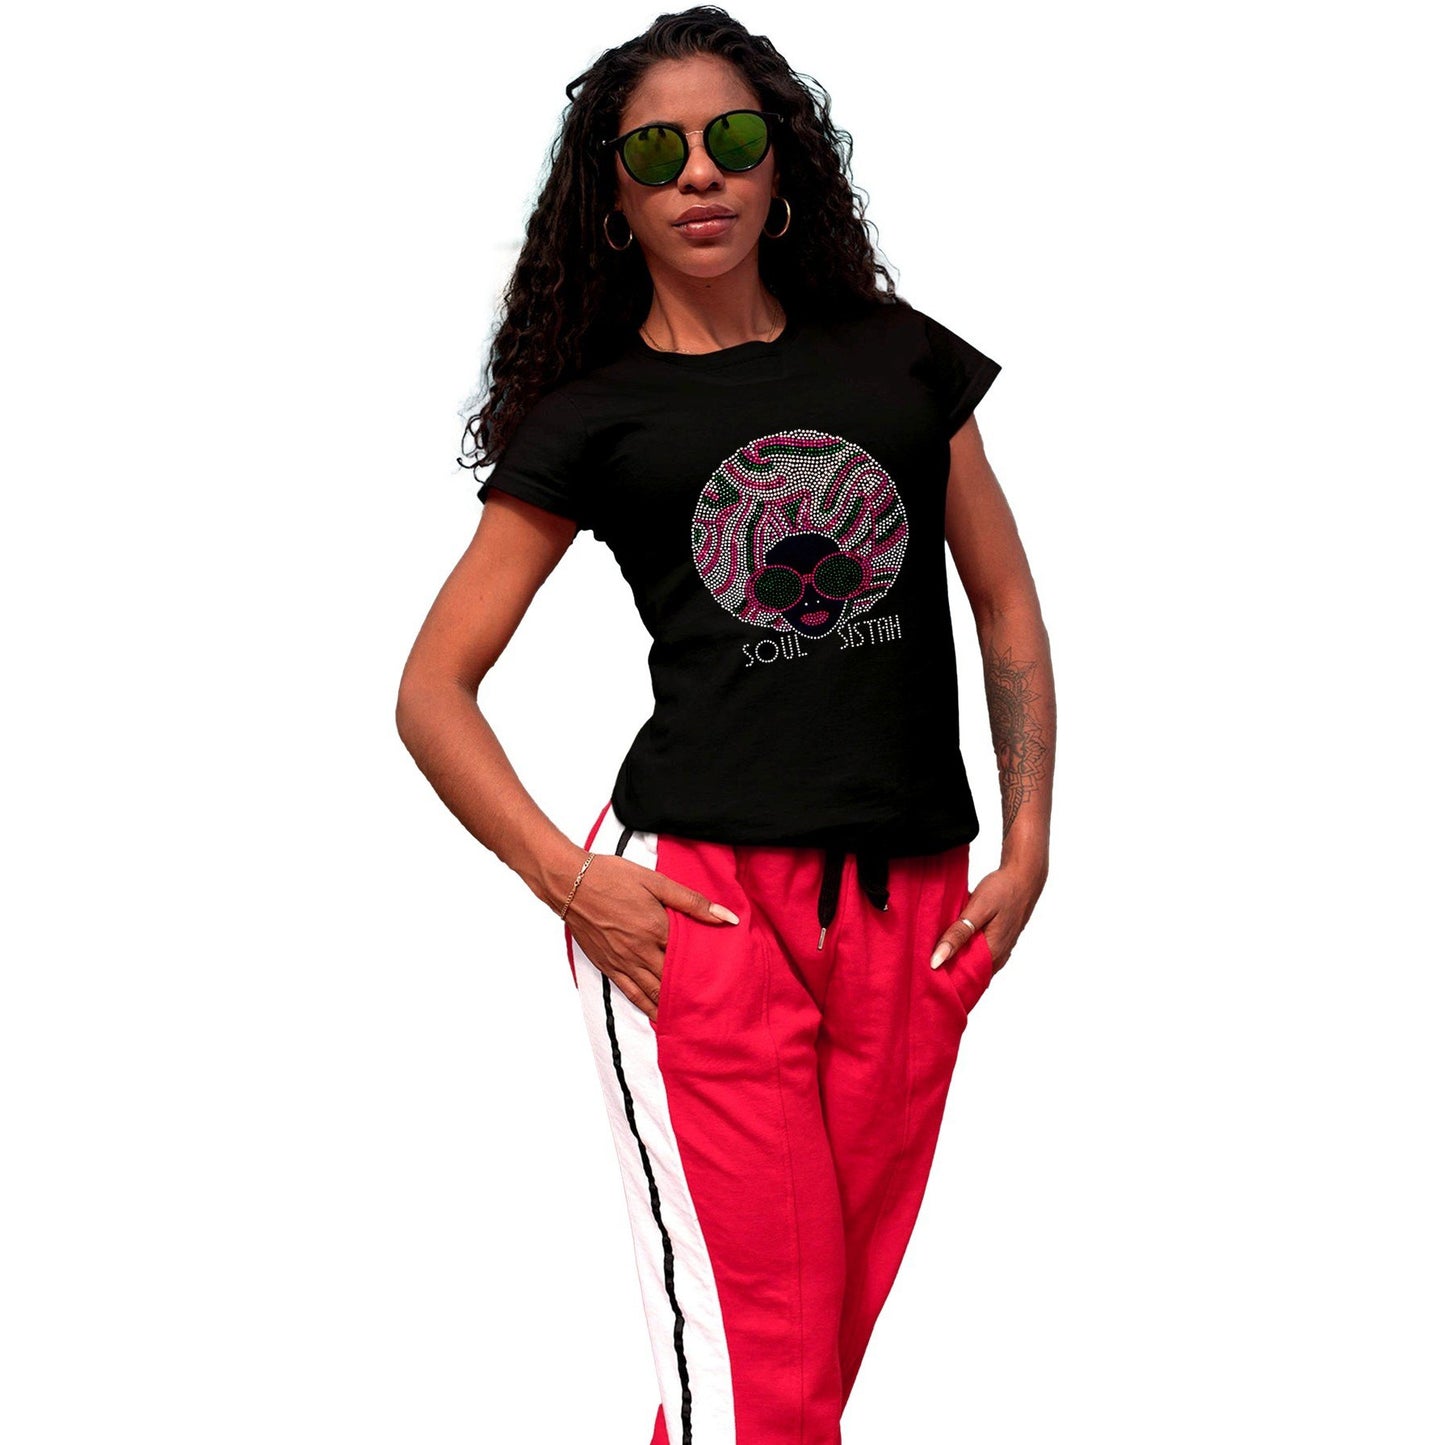 Soul Sistah Rhinestone Afro Girl T-Shirt